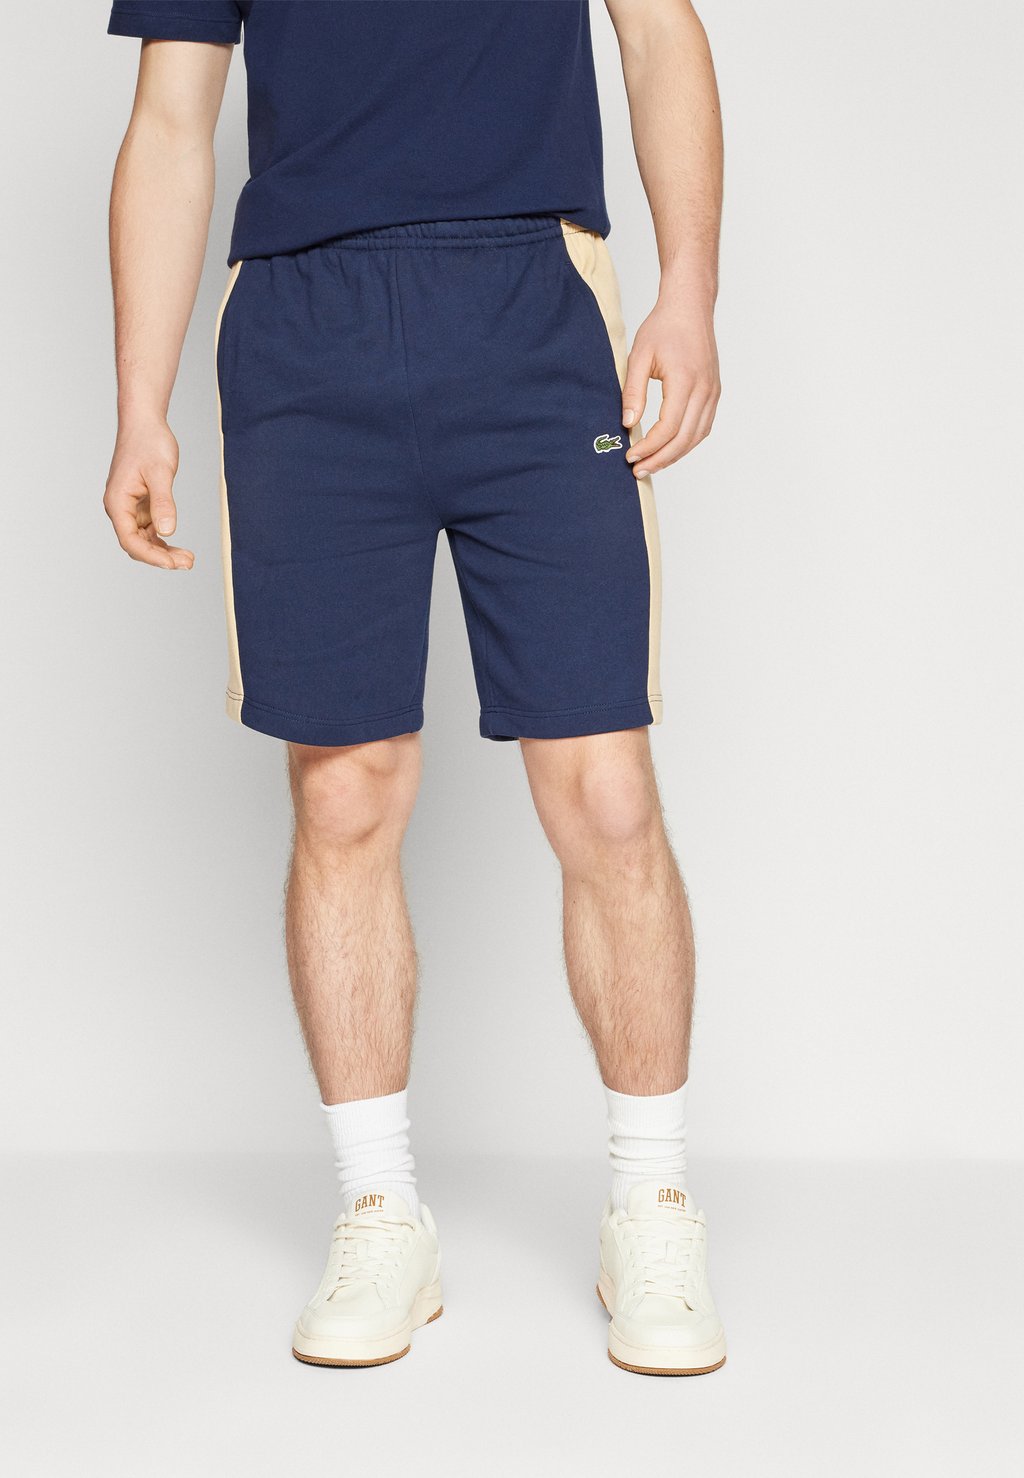 Спортивные брюки Color Block Shorts Lacoste, цвет navy blue/croissant спортивные шорты sports shorts lacoste цвет navy blue